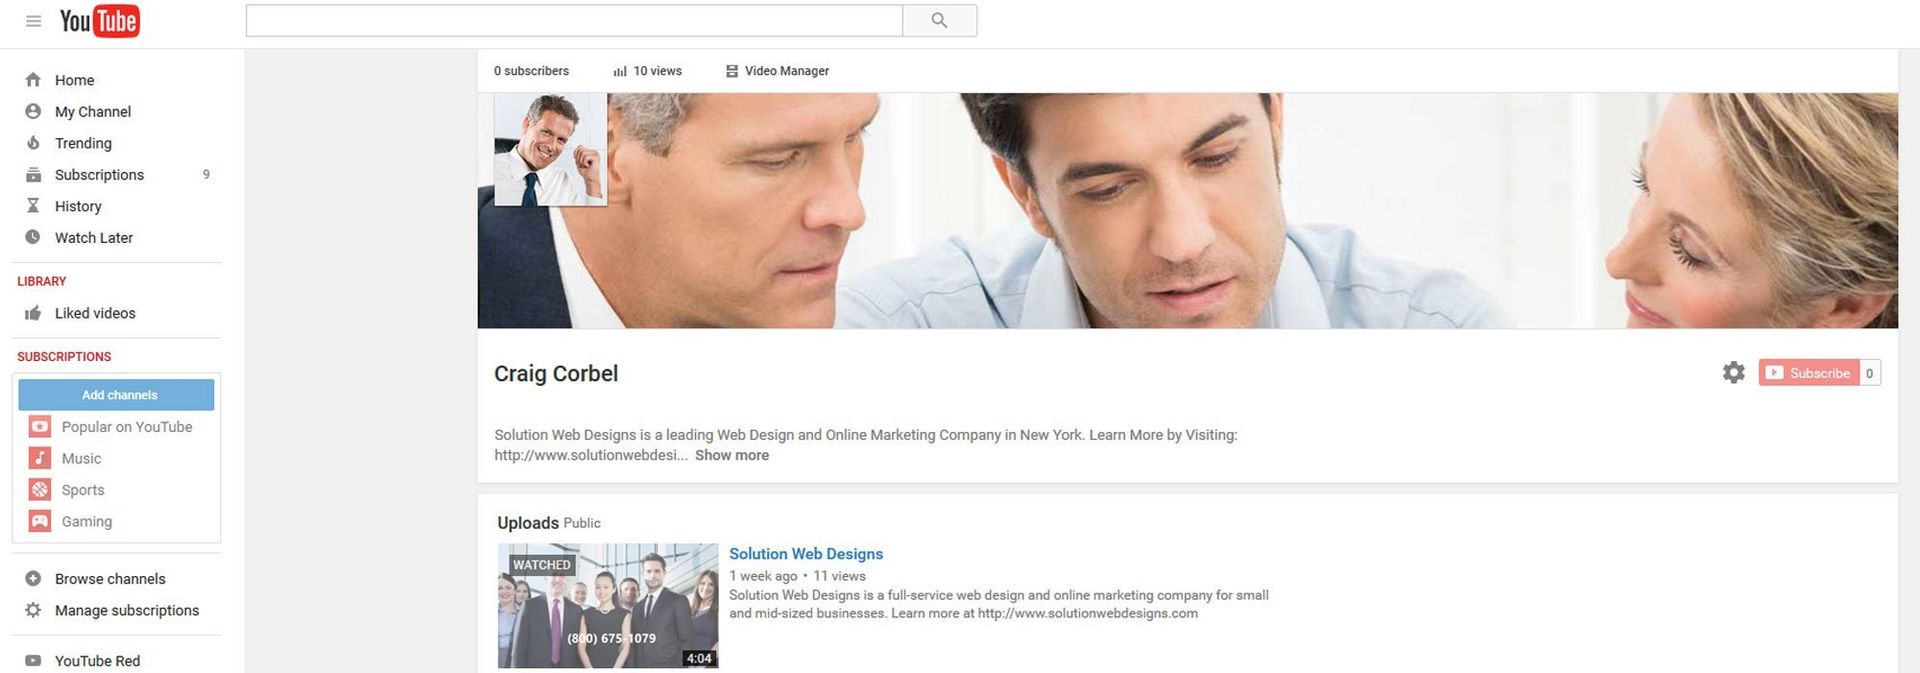 YouTube Marketing Agency Solution Web Designs